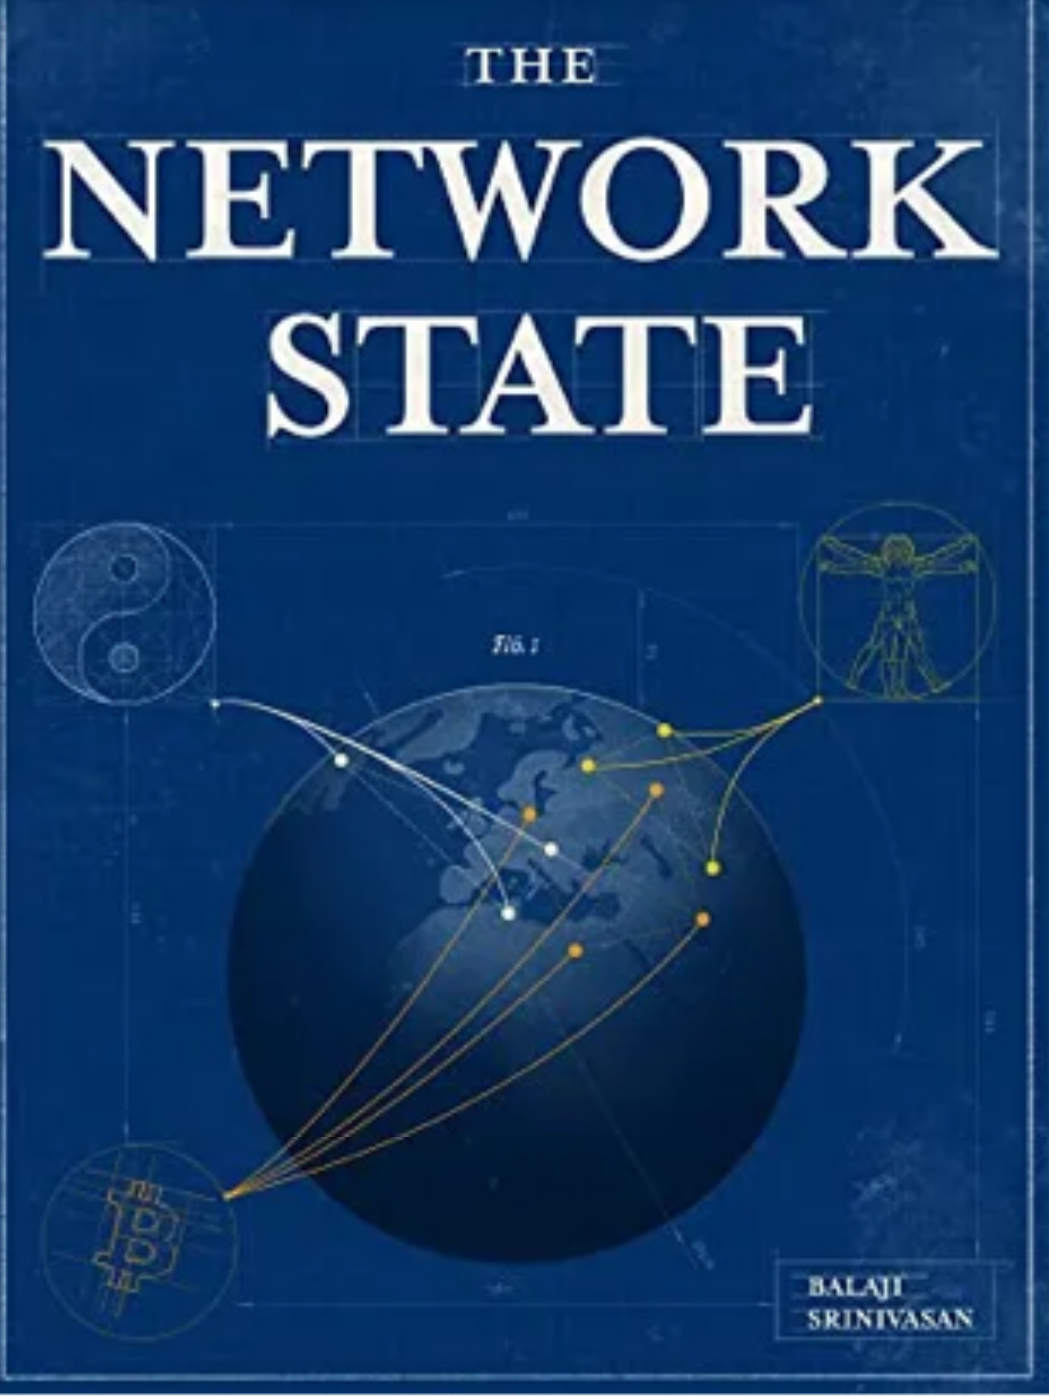 The Network State – by Balaji Srinivasan